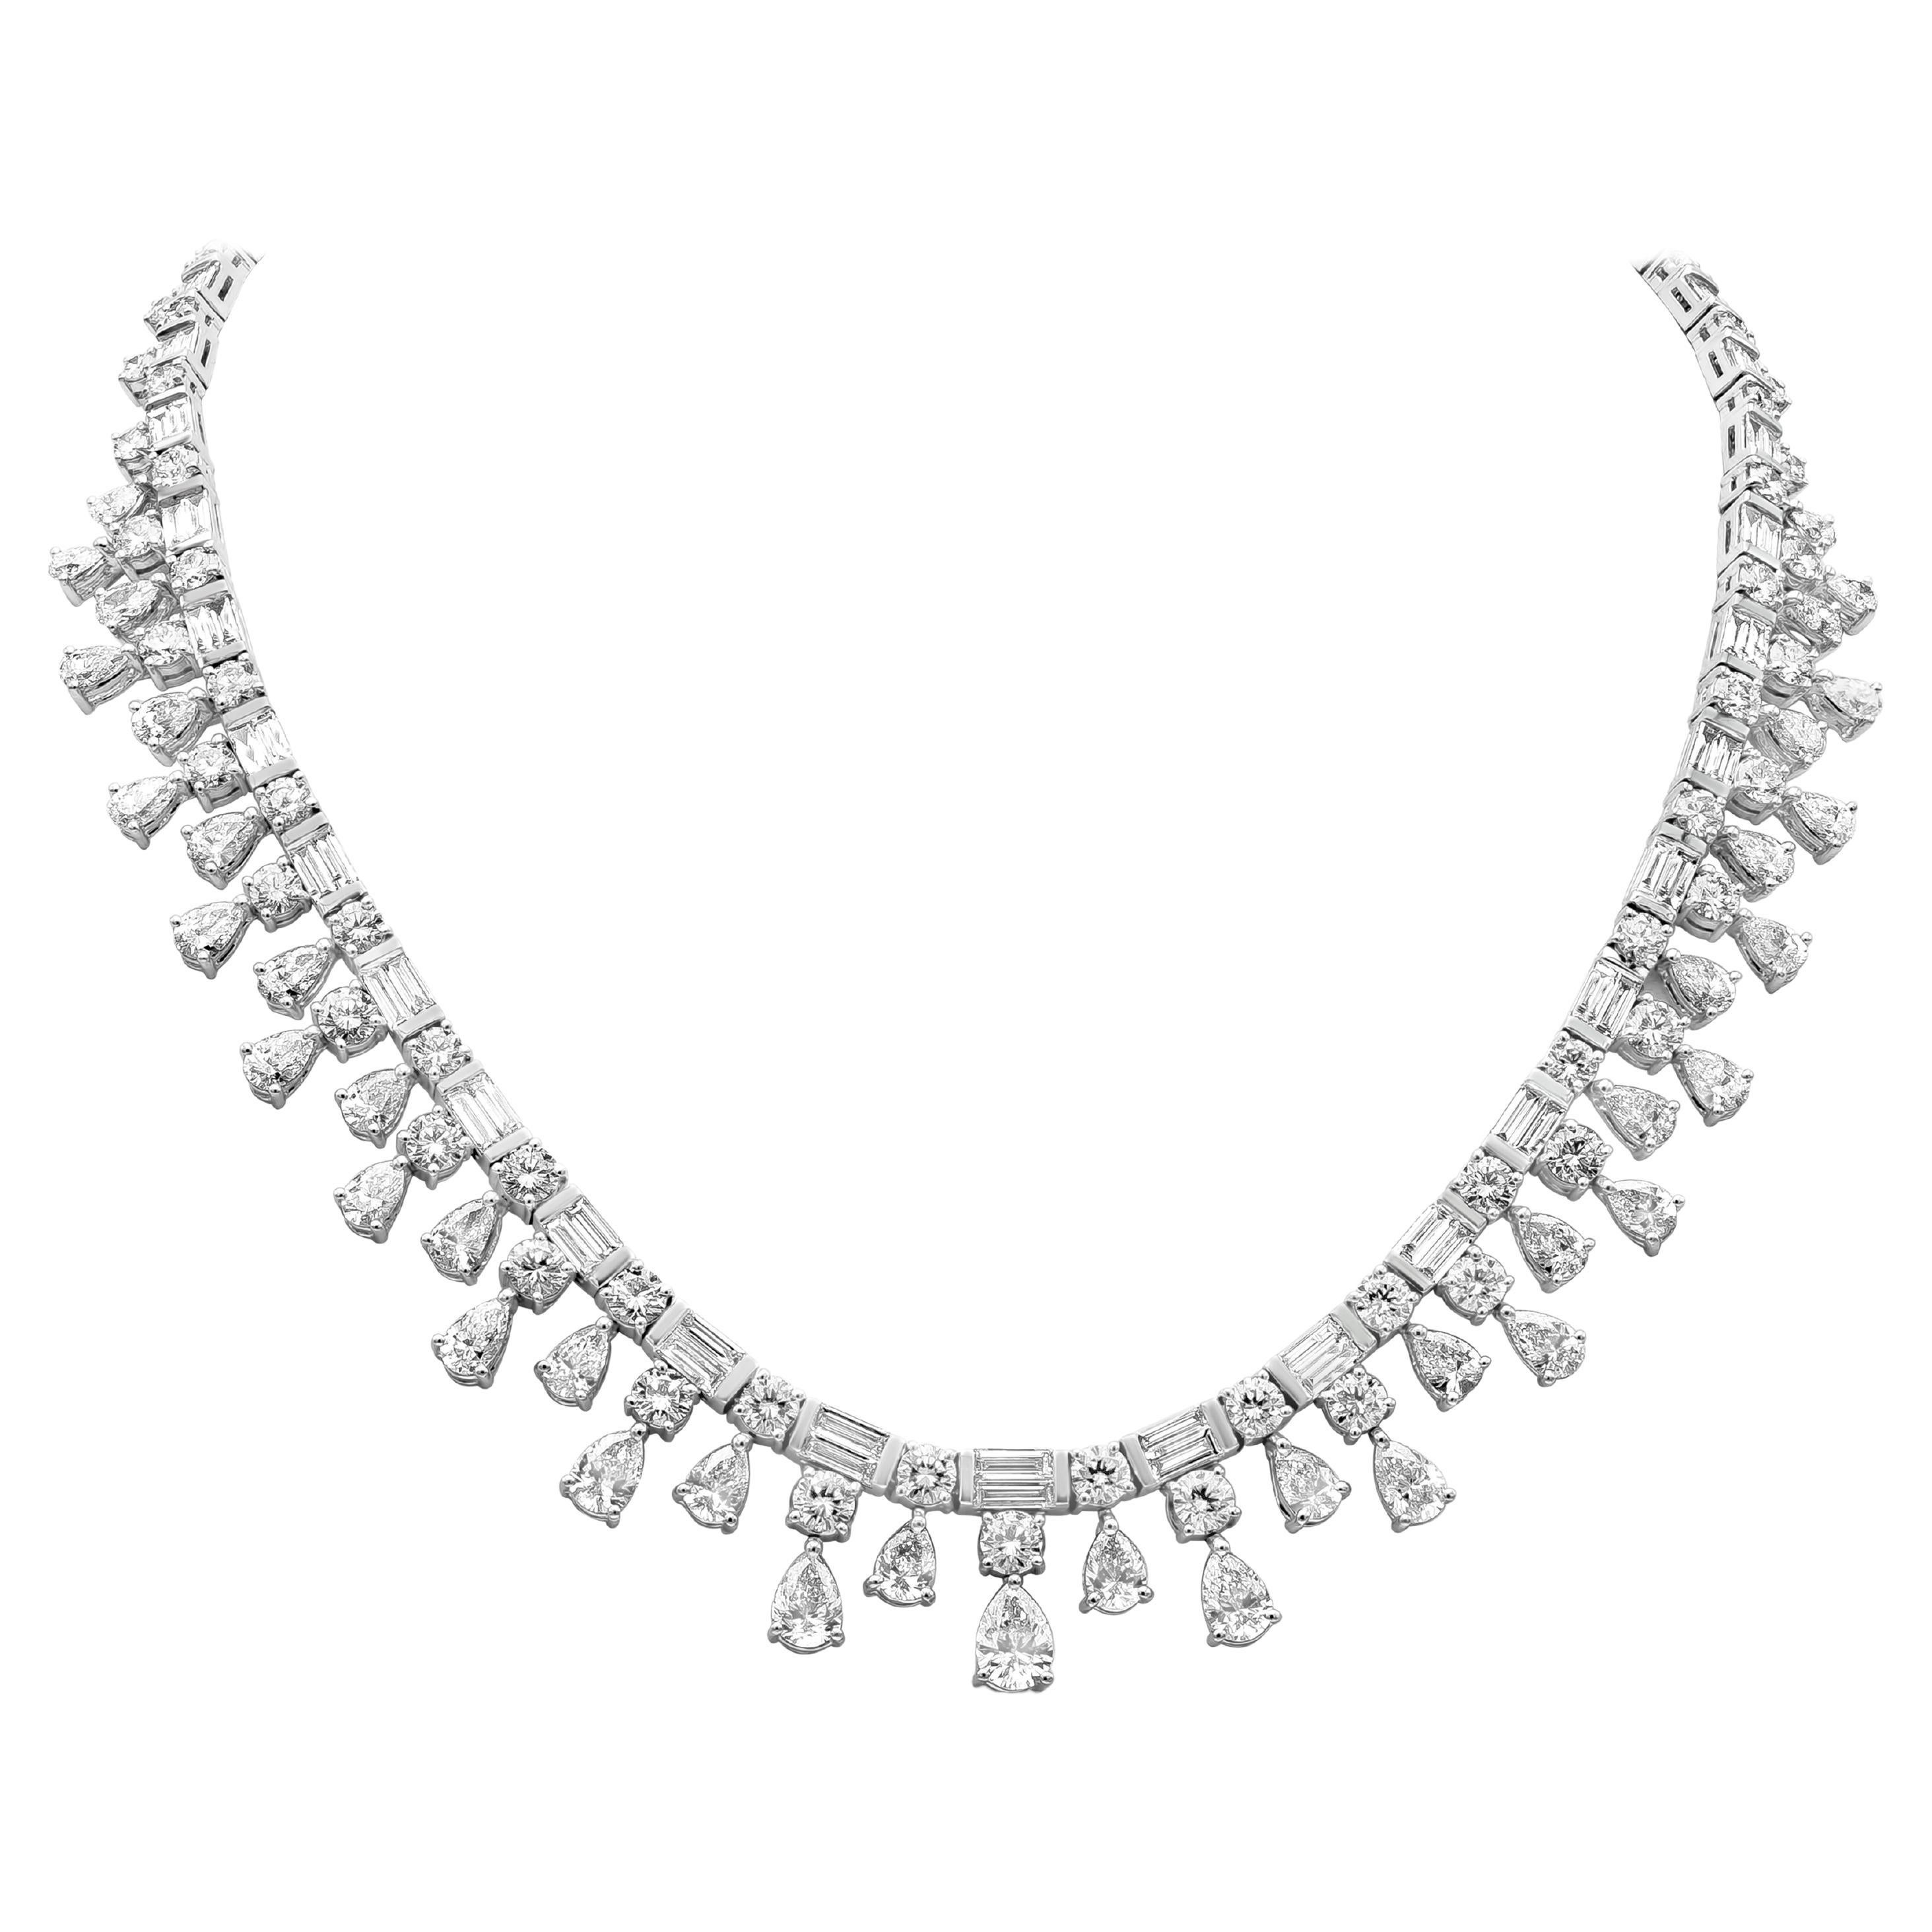 Roman Malakov 36.28 Carat Total Mixed Cut Diamond Fringe Necklace in Platinum For Sale